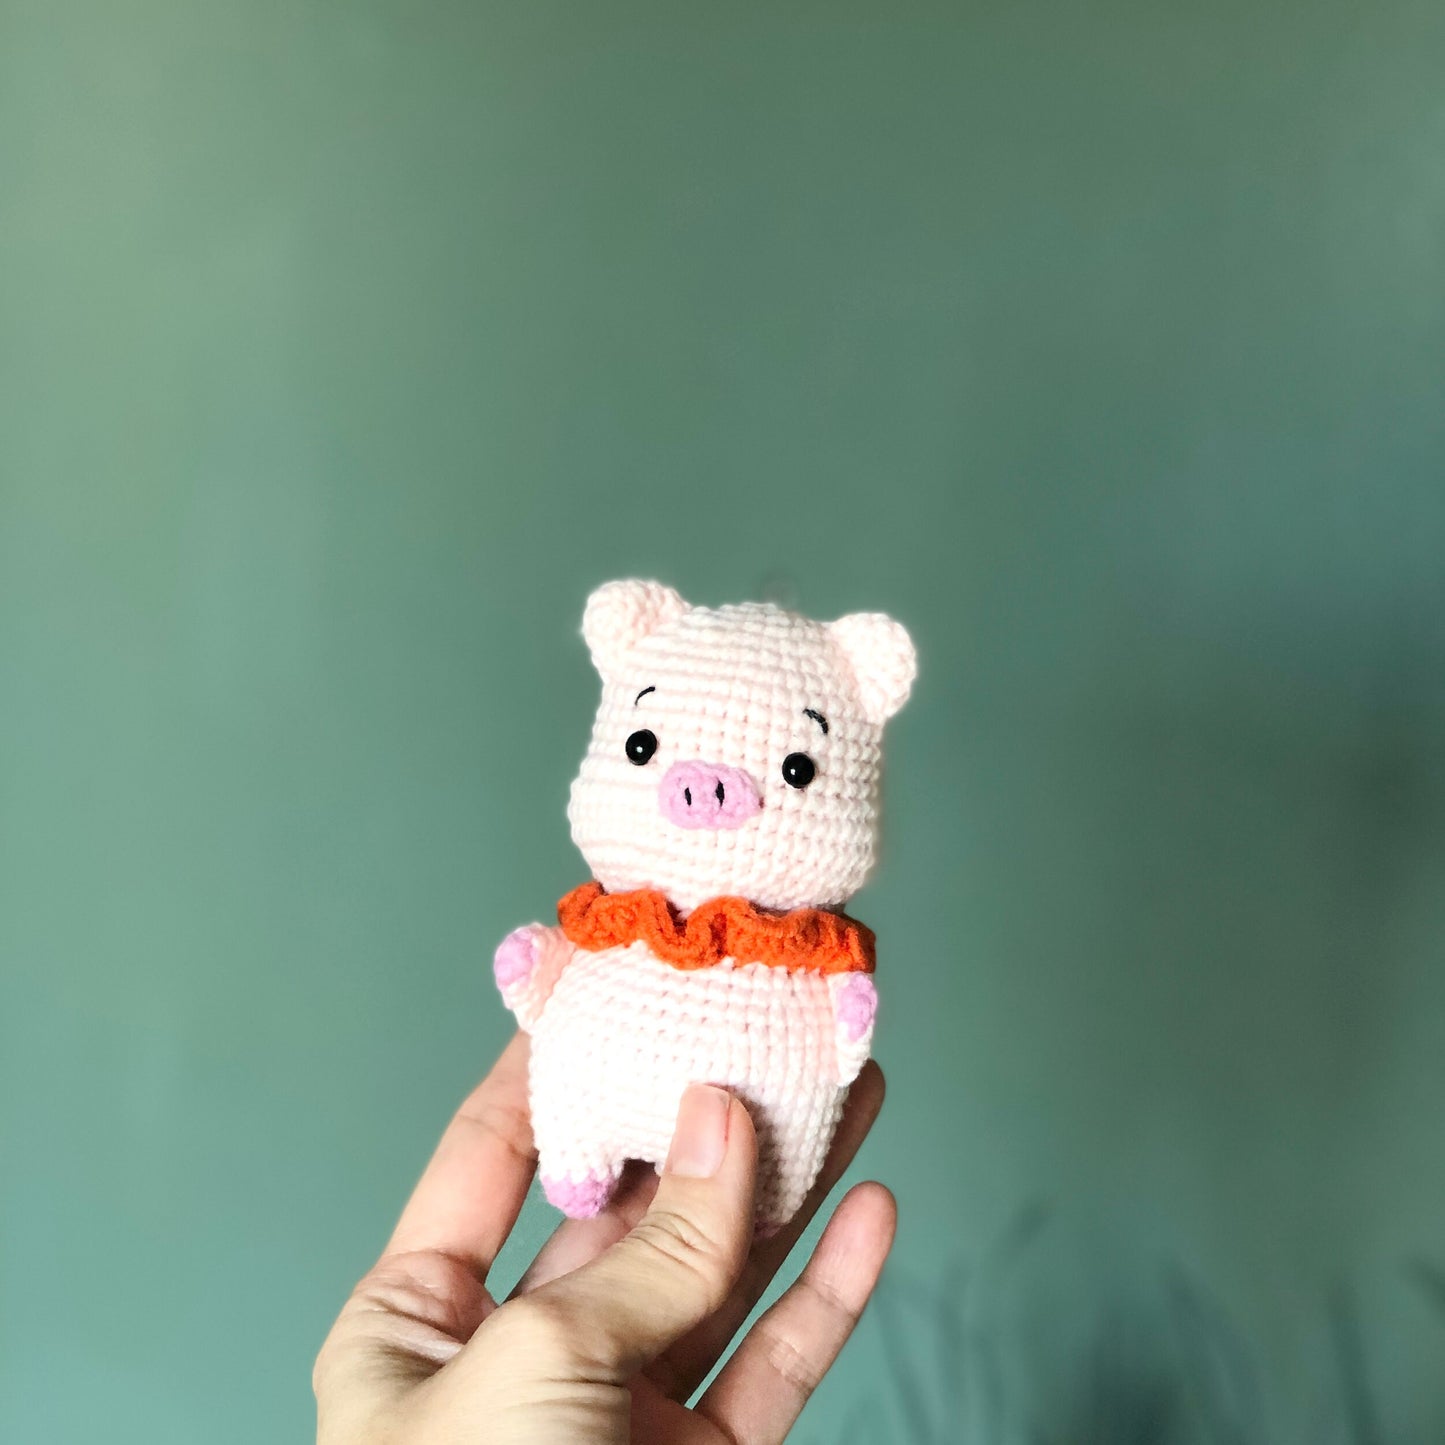 Handmade pig crochet, amigurumi stuffed, soft toy for baby, kid, gift, car hanging accessory